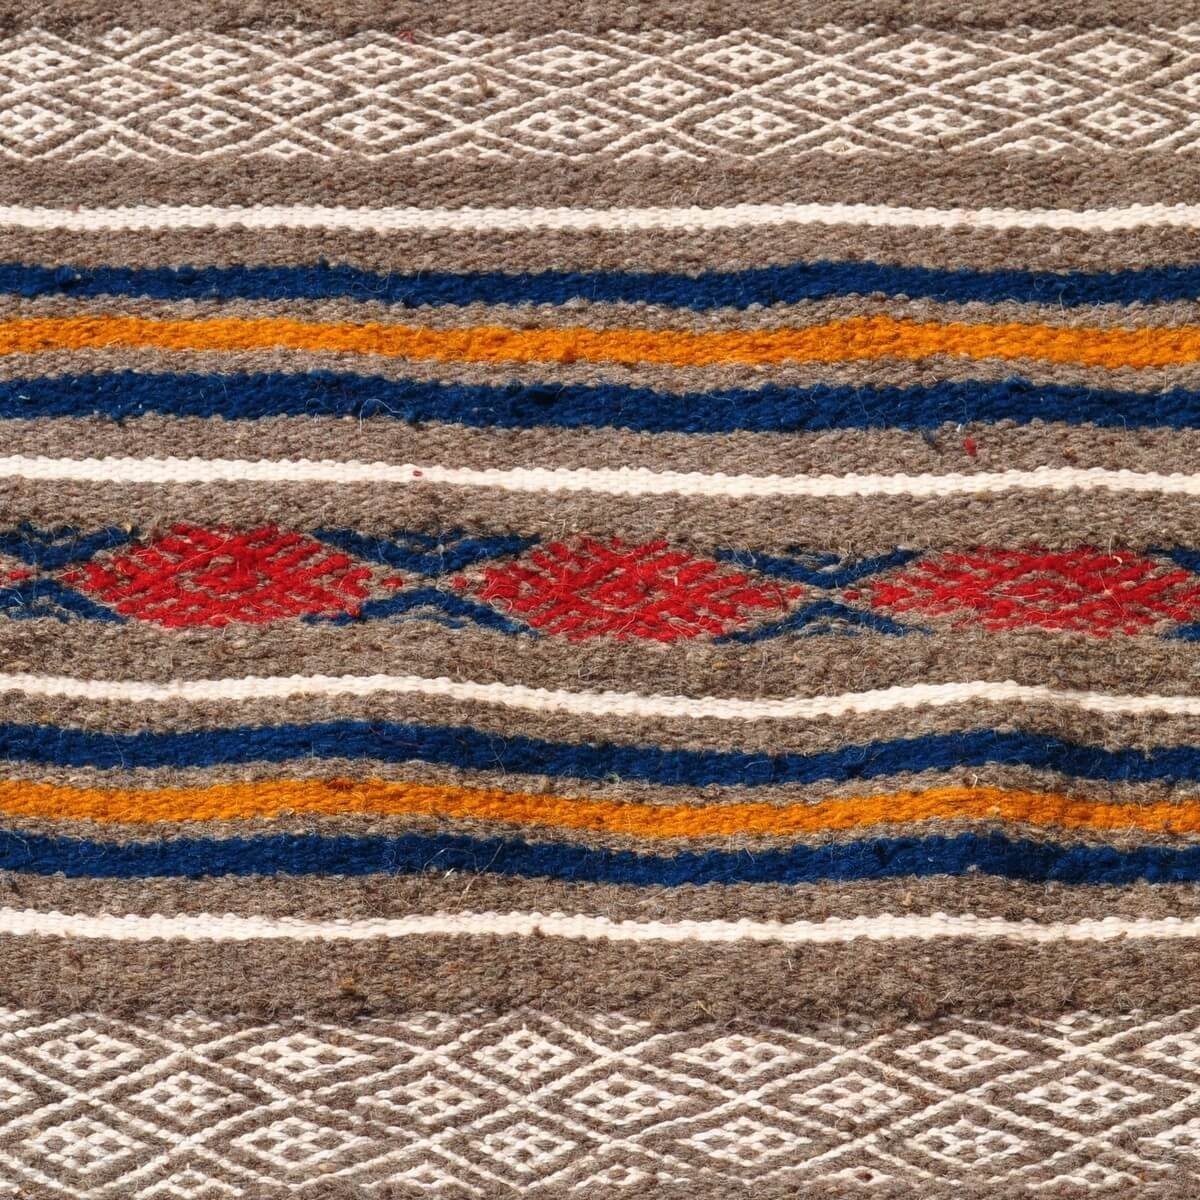 Berber tapijt Tapijt Kilim El Bey 145x255 Grijs/Rood/Blauw/Jeel (Handgeweven, Wol, Tunesië) Tunesisch kilimdeken, Marokkaanse st